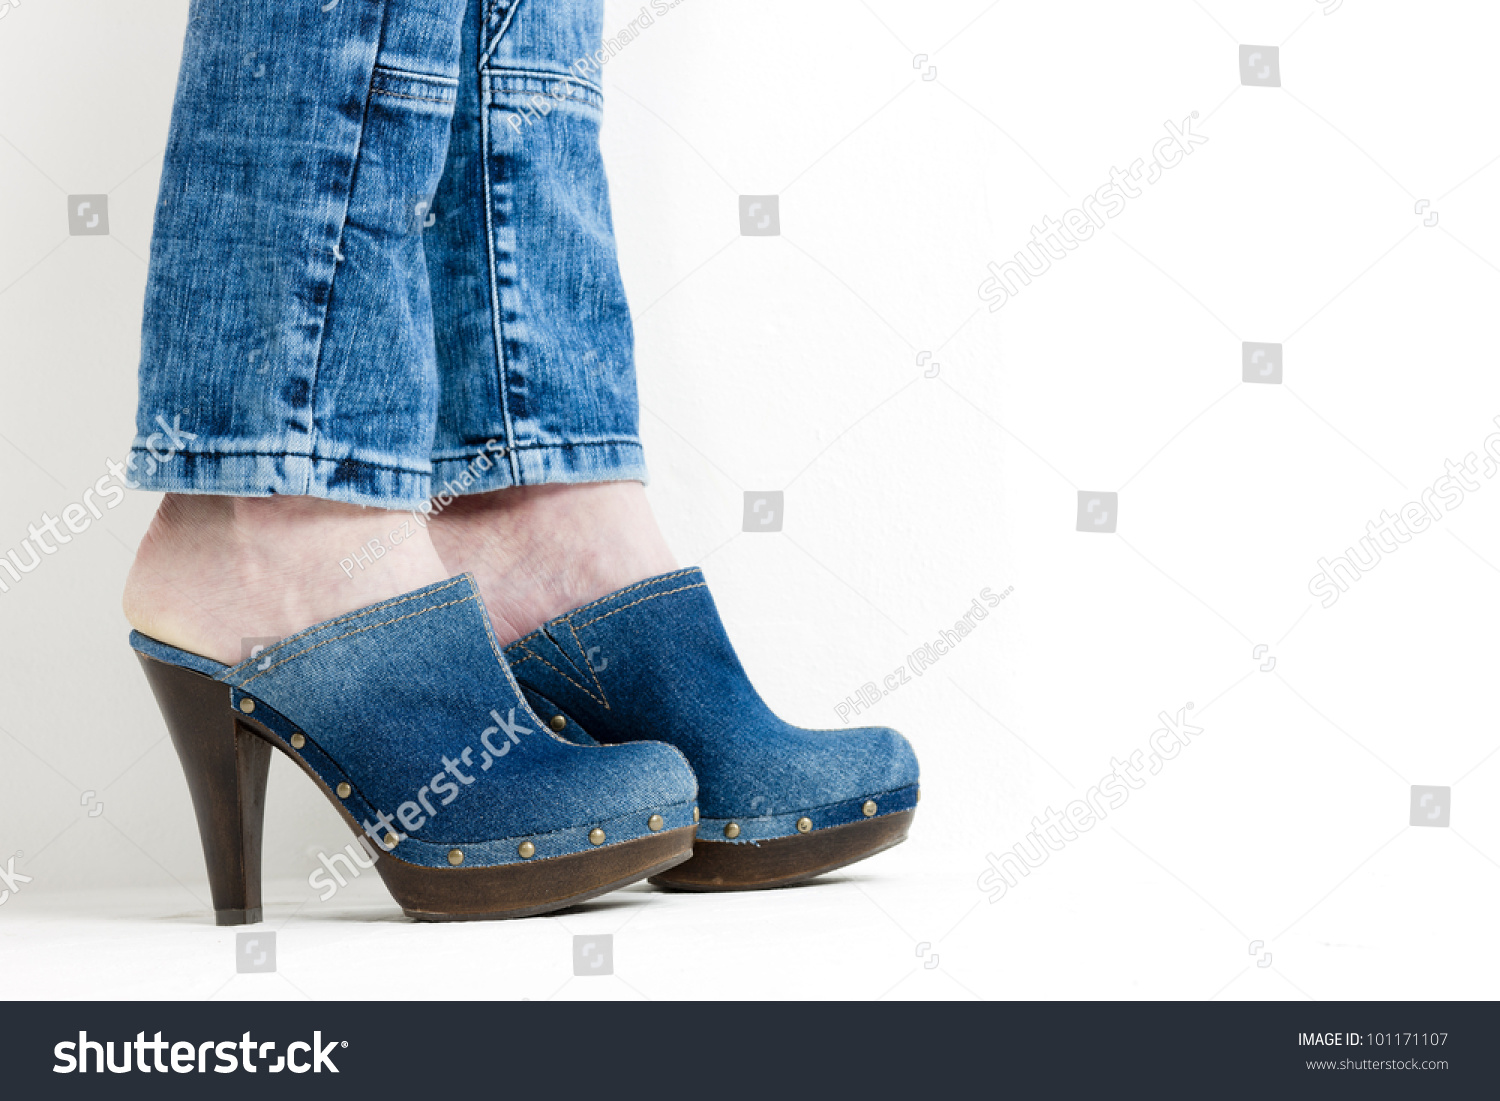 Detail Of Woman Wearing Denim Clogs Stock Photo 101171107 : Shutterstock